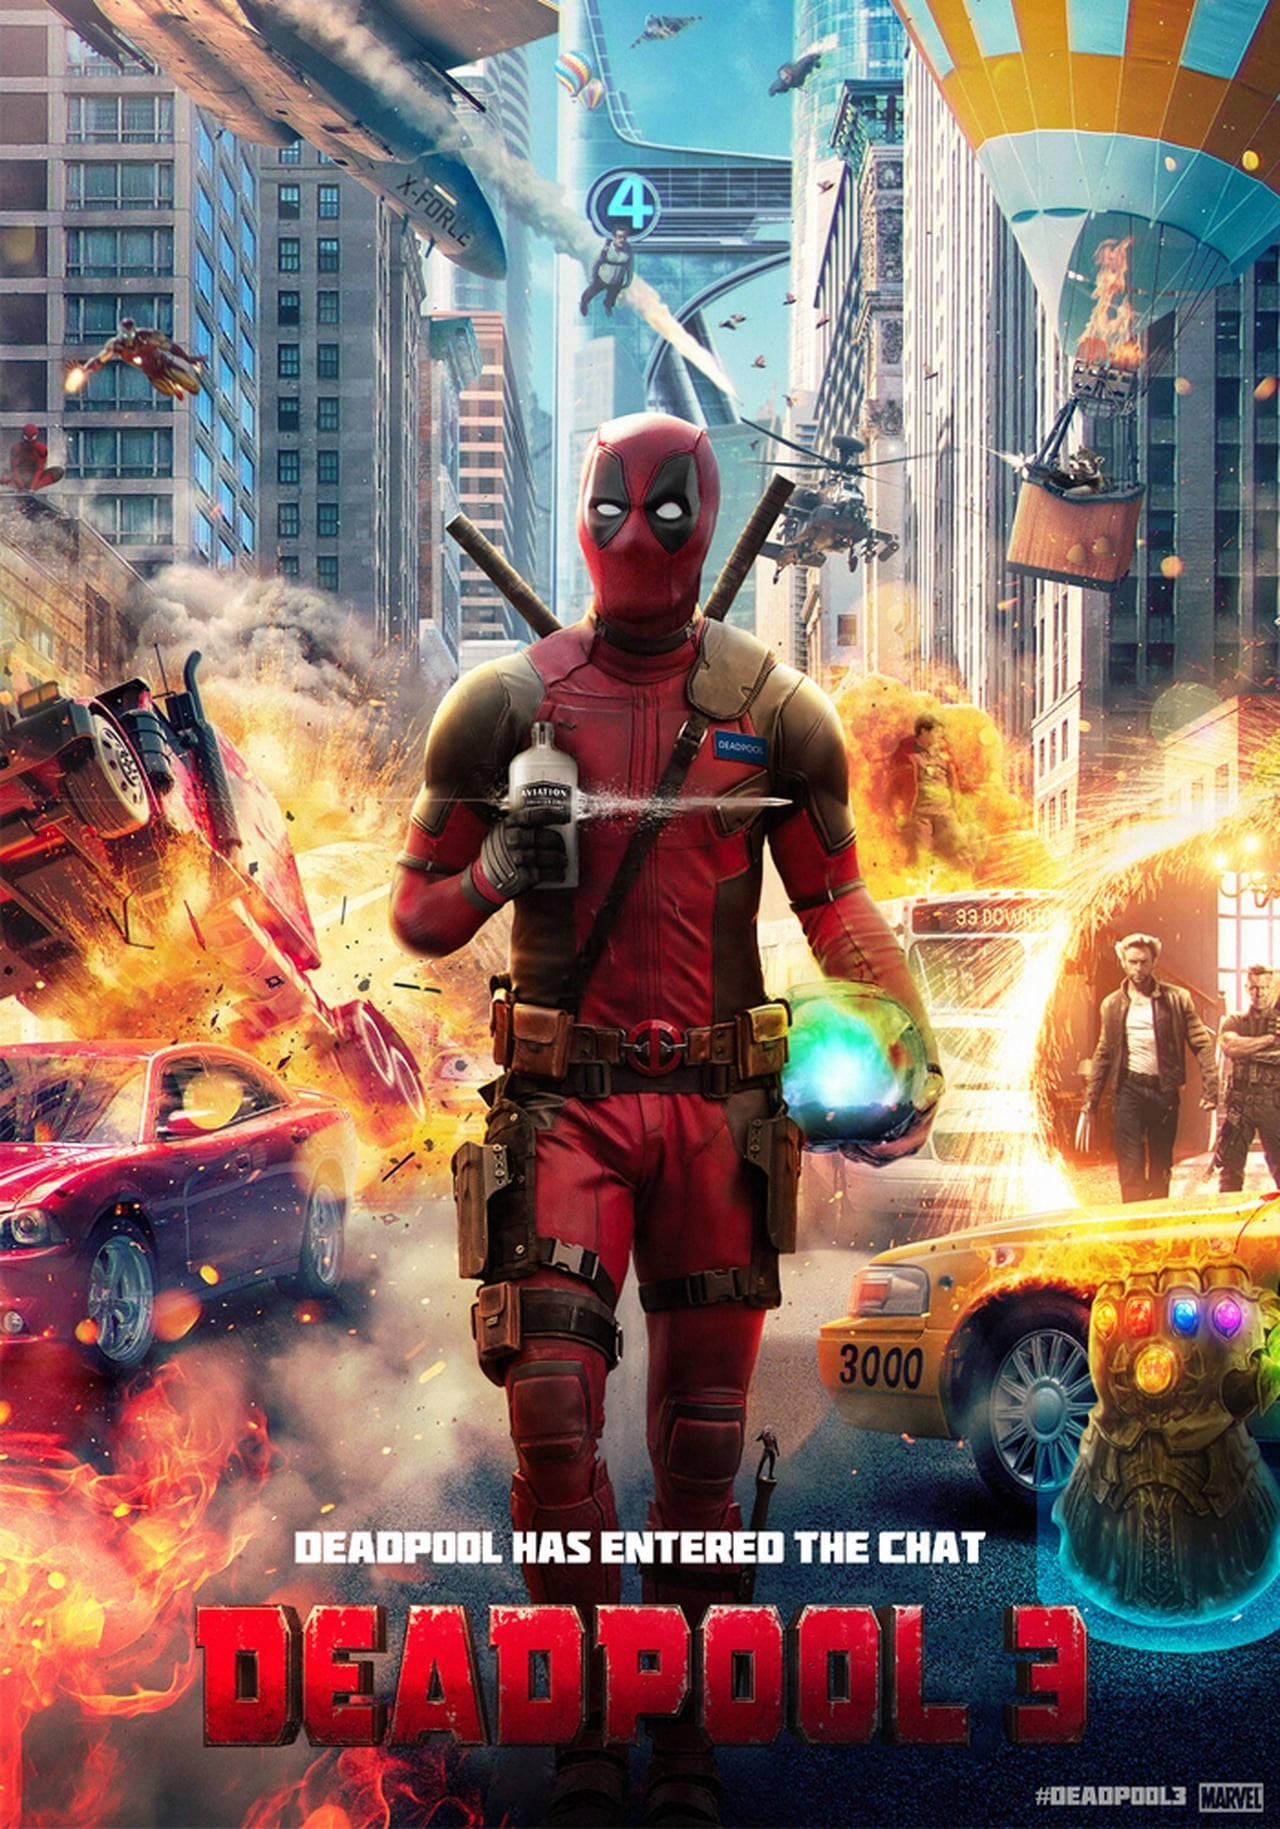 Deadpool 3 Movie Poster Portals Rp2oz393eex7vrgu 